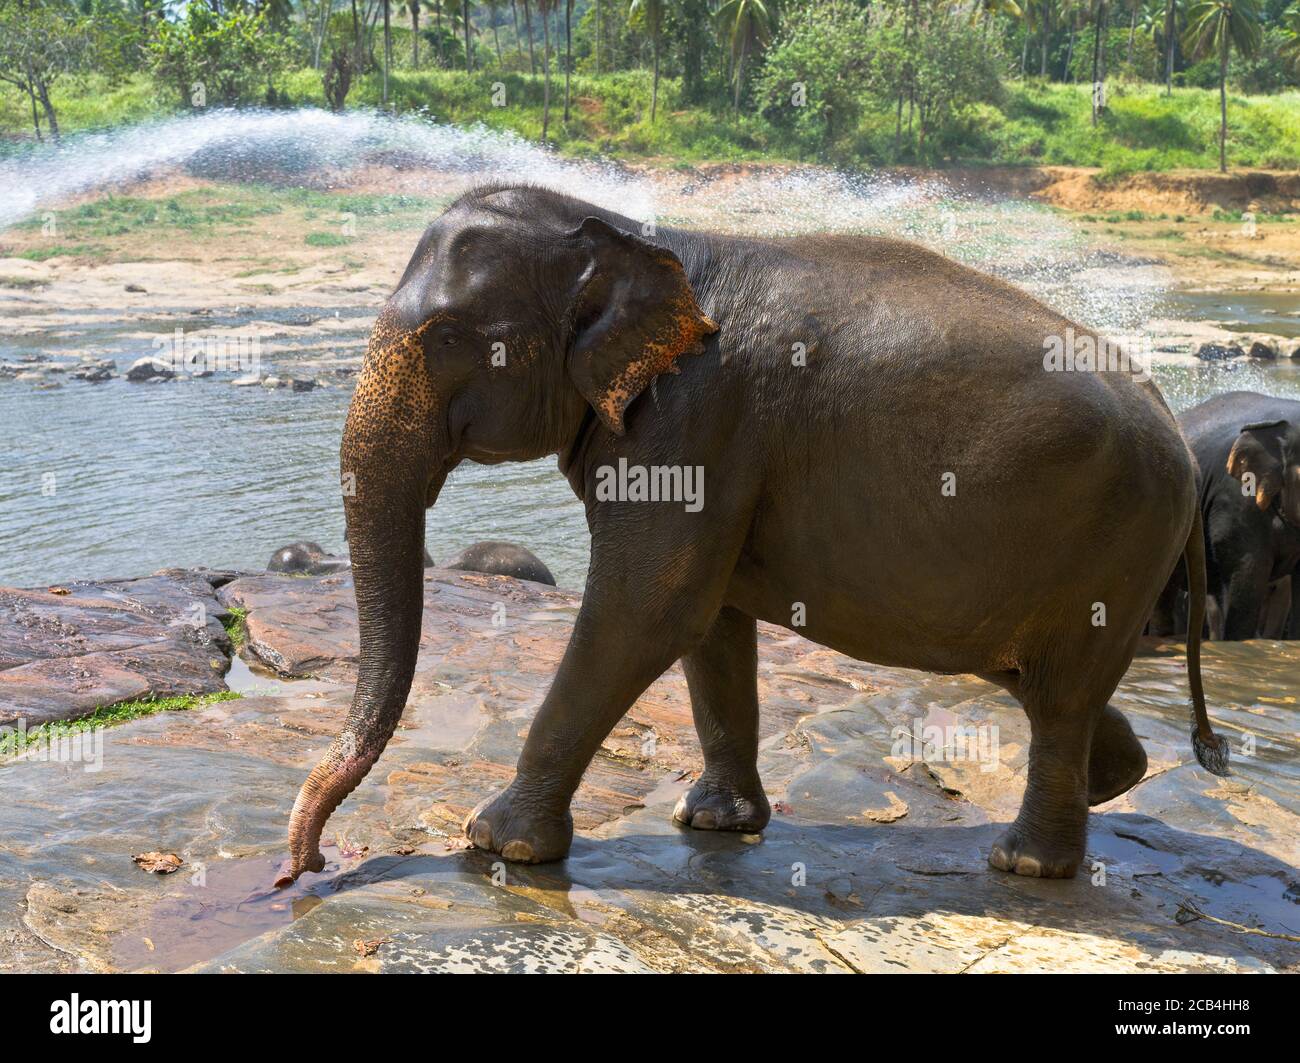 dh Elepha maximus maximus PINNAWKA SRI LANKA temps de bain spray Eau éléphant orphelinat éléphants vue latérale Banque D'Images